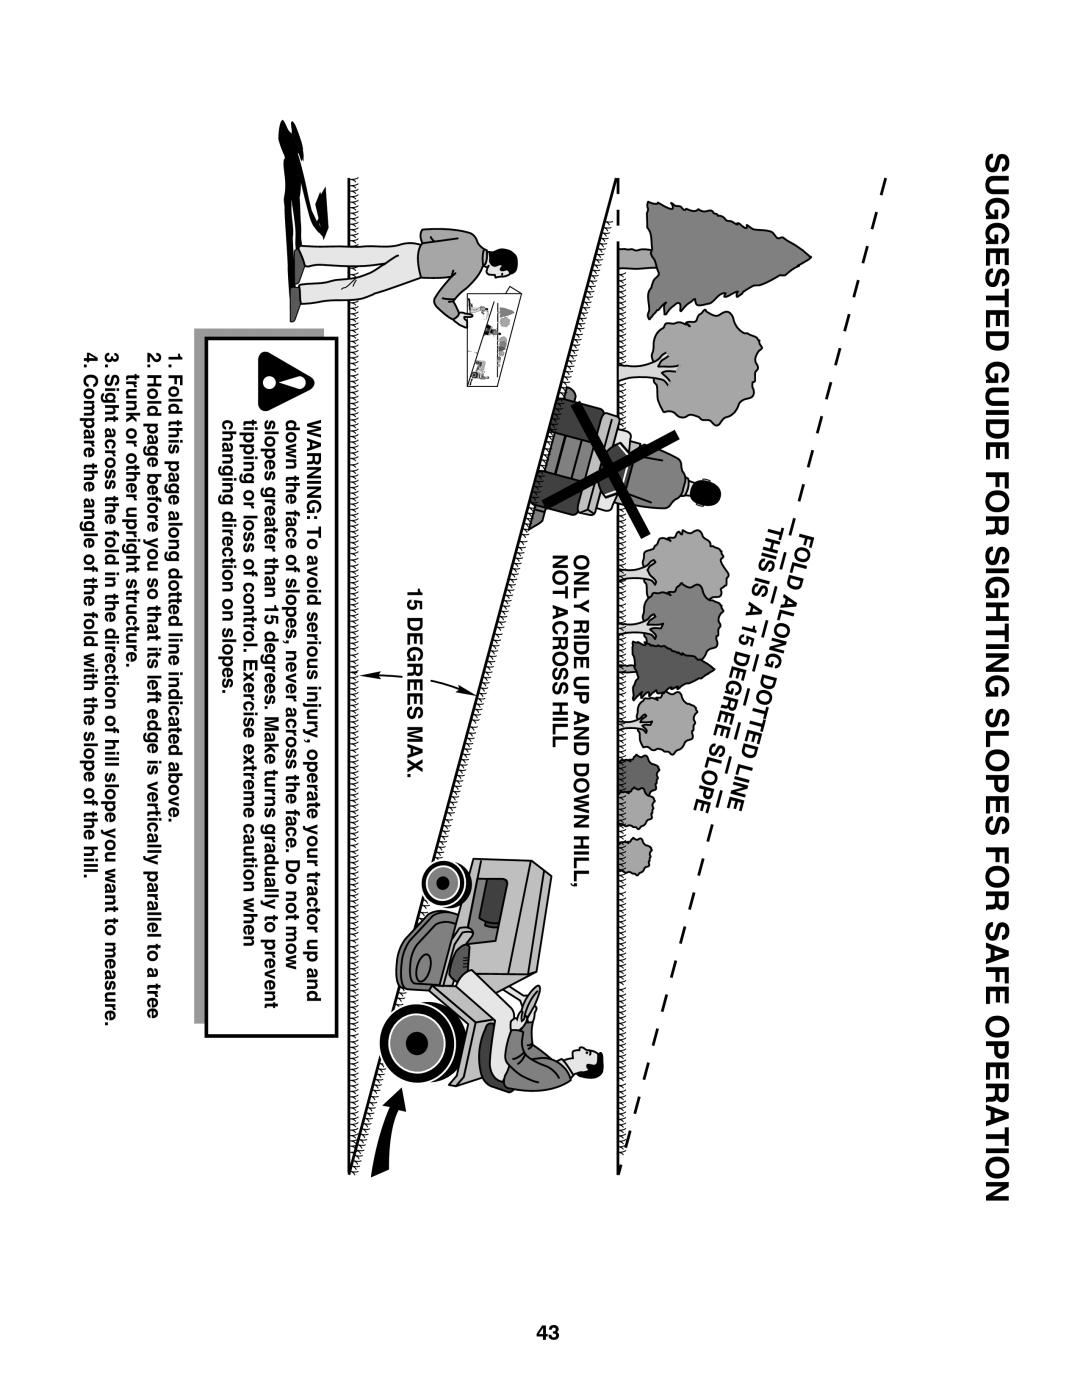 Husqvarna GTH26V52LS owner manual Suggested Guide For Sighting Slopes For Safe Operation 